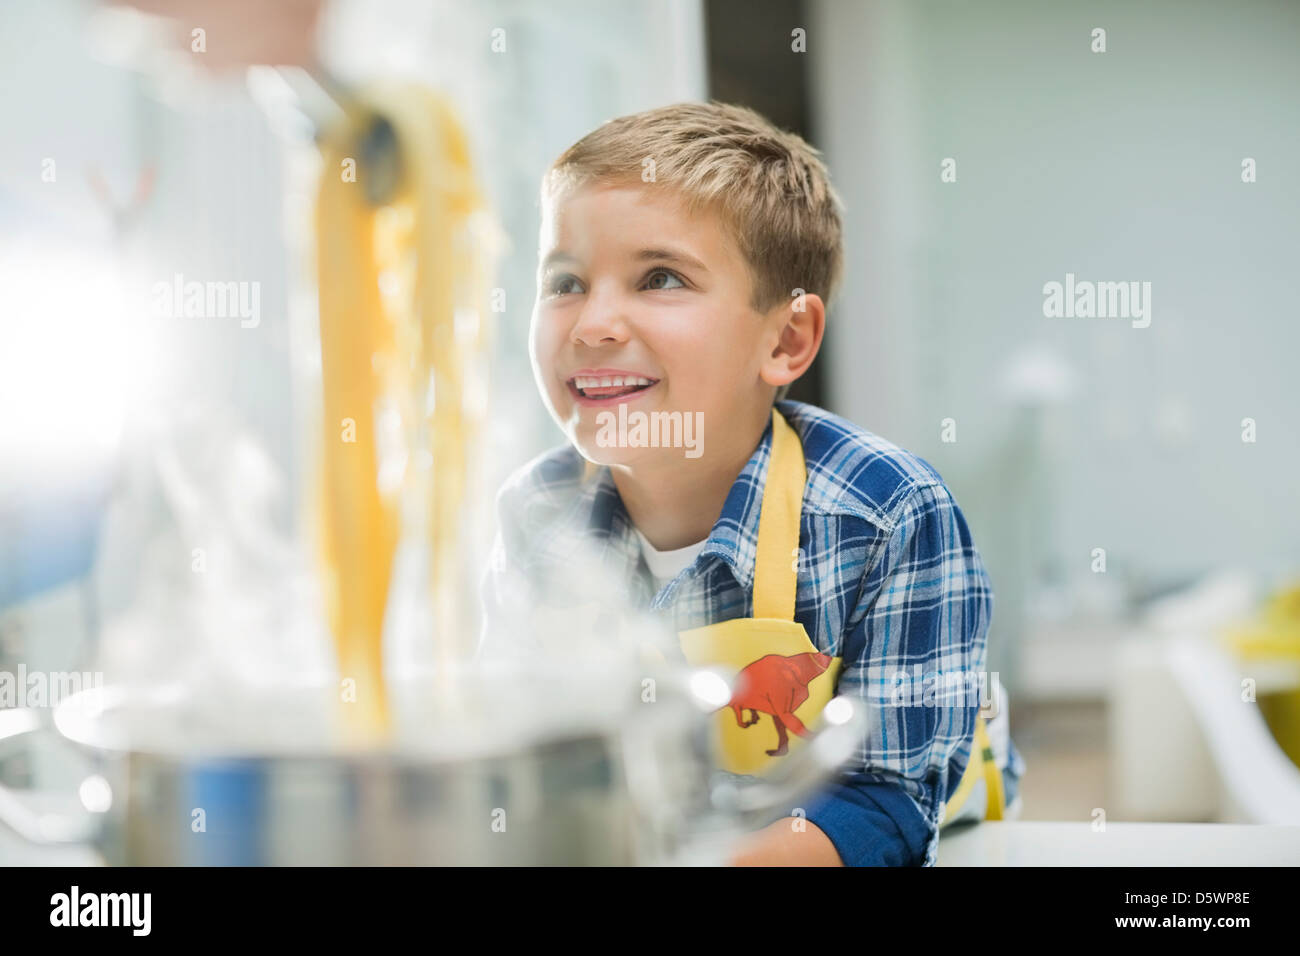 Boy smiling in kitchen Banque D'Images